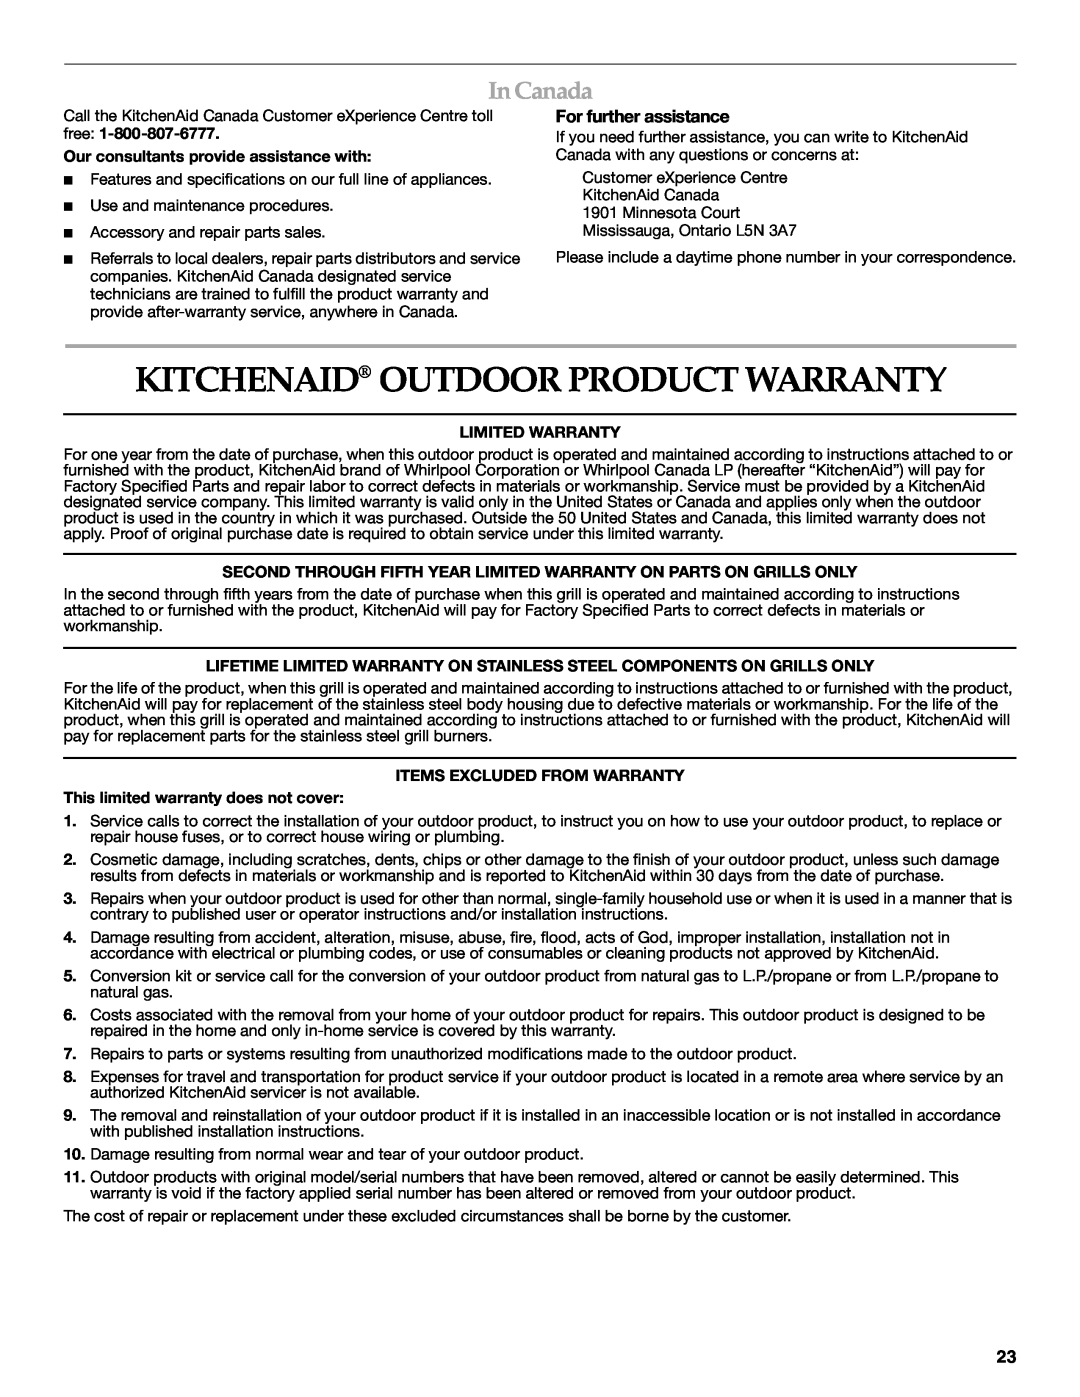 KitchenAid KBSU367T, KBSS361T, KBSU487T Kitchenaid Outdoor Product Warranty, In Canada, For further assistance 